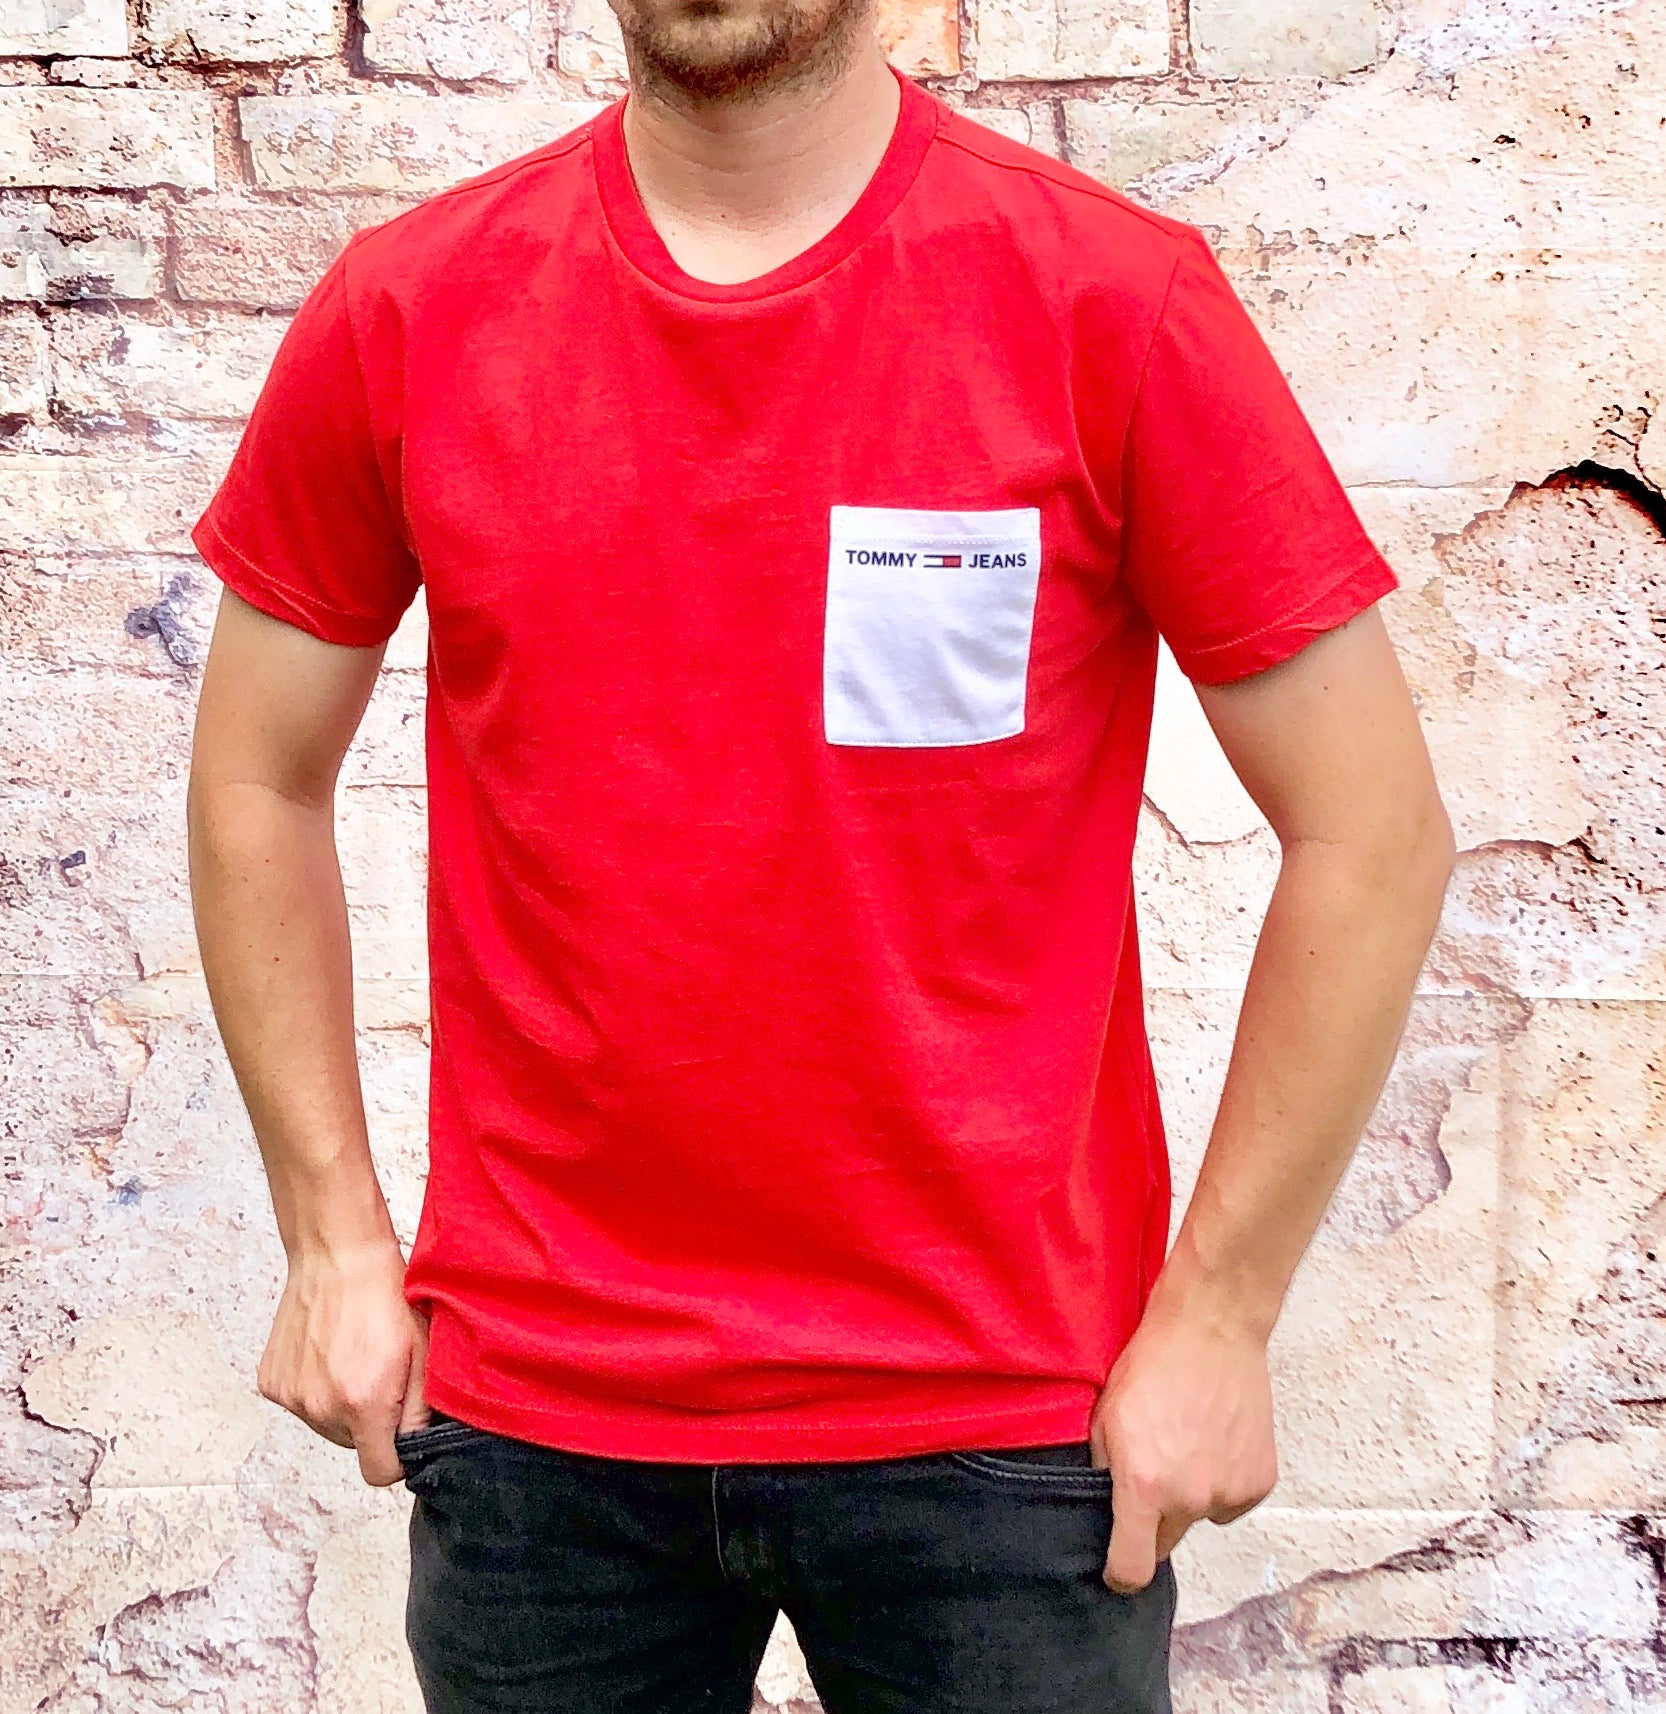 gras plakboek Goed doen Red Tommy Hilfiger Jeans tshirt / tee shirt, men's branded designer –  System F